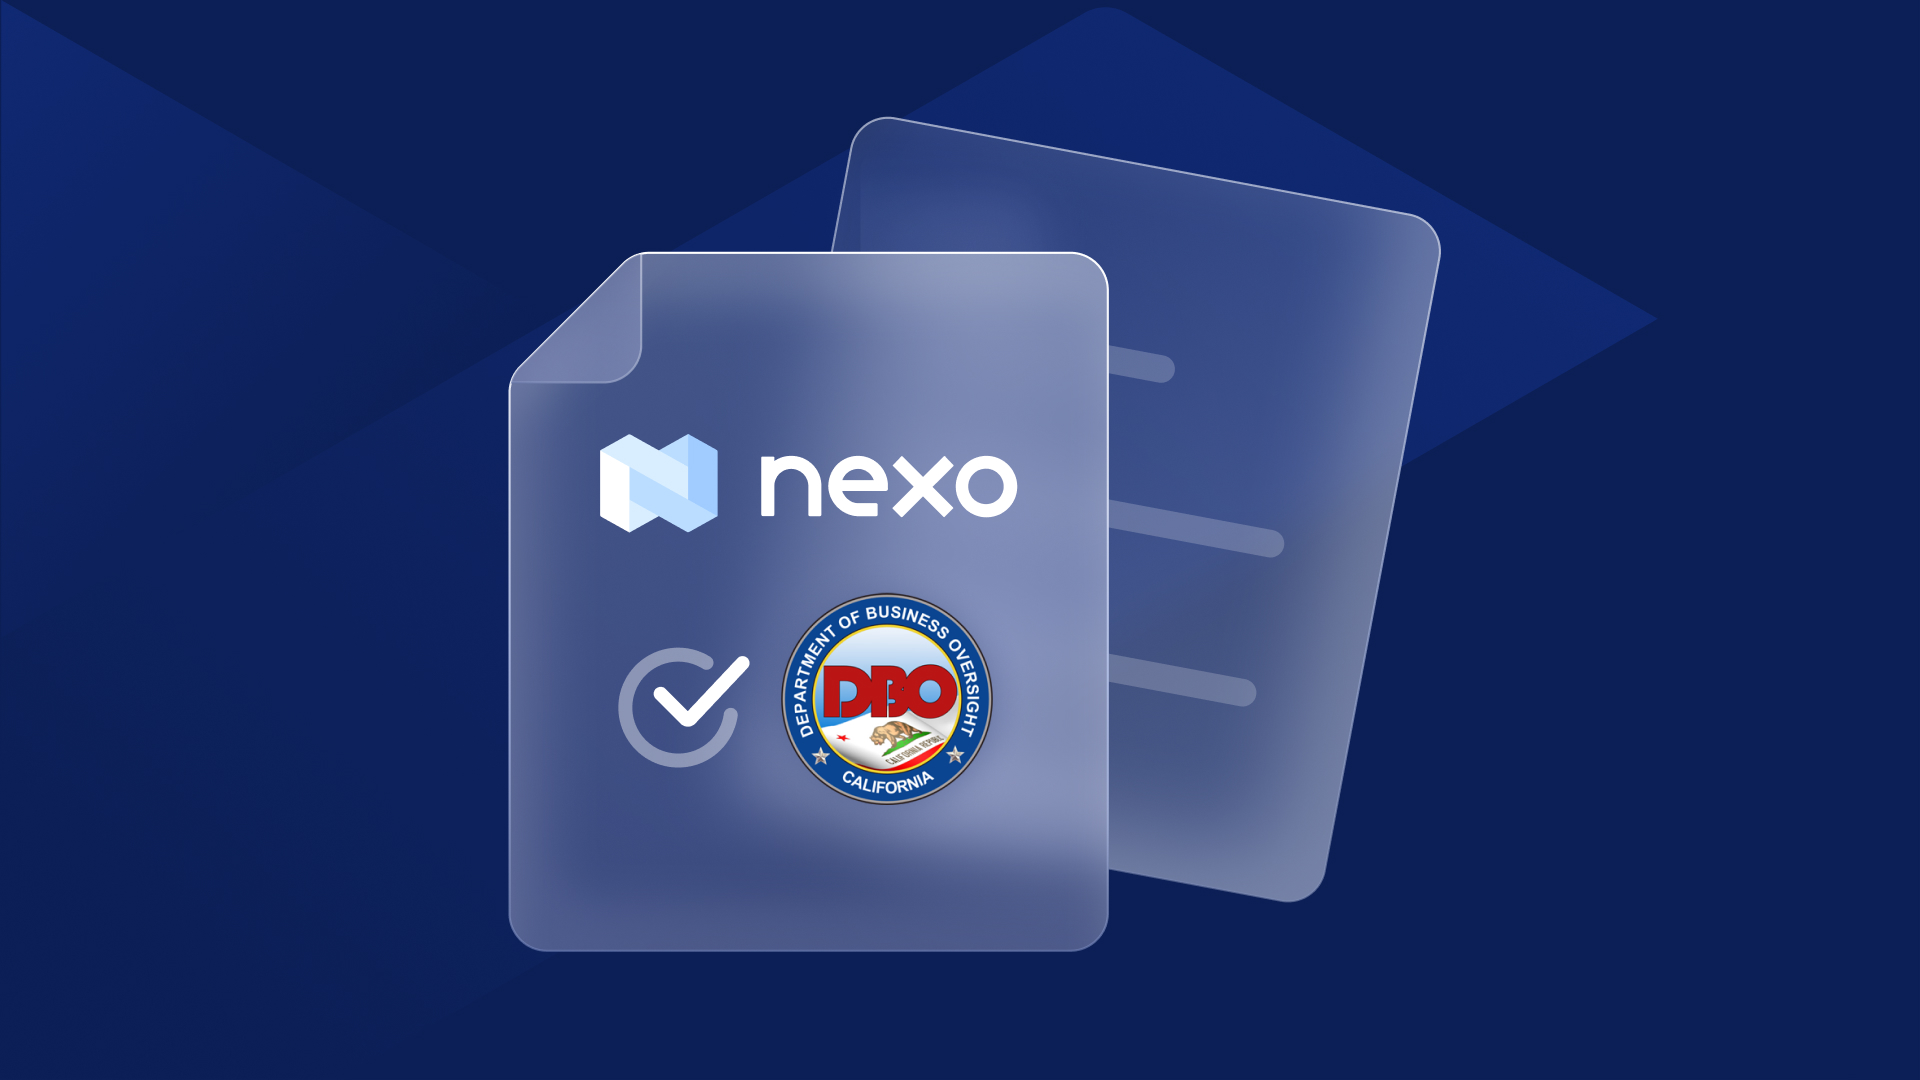 Nexo Awarded California Finance Lender License from the Department of Business Oversight